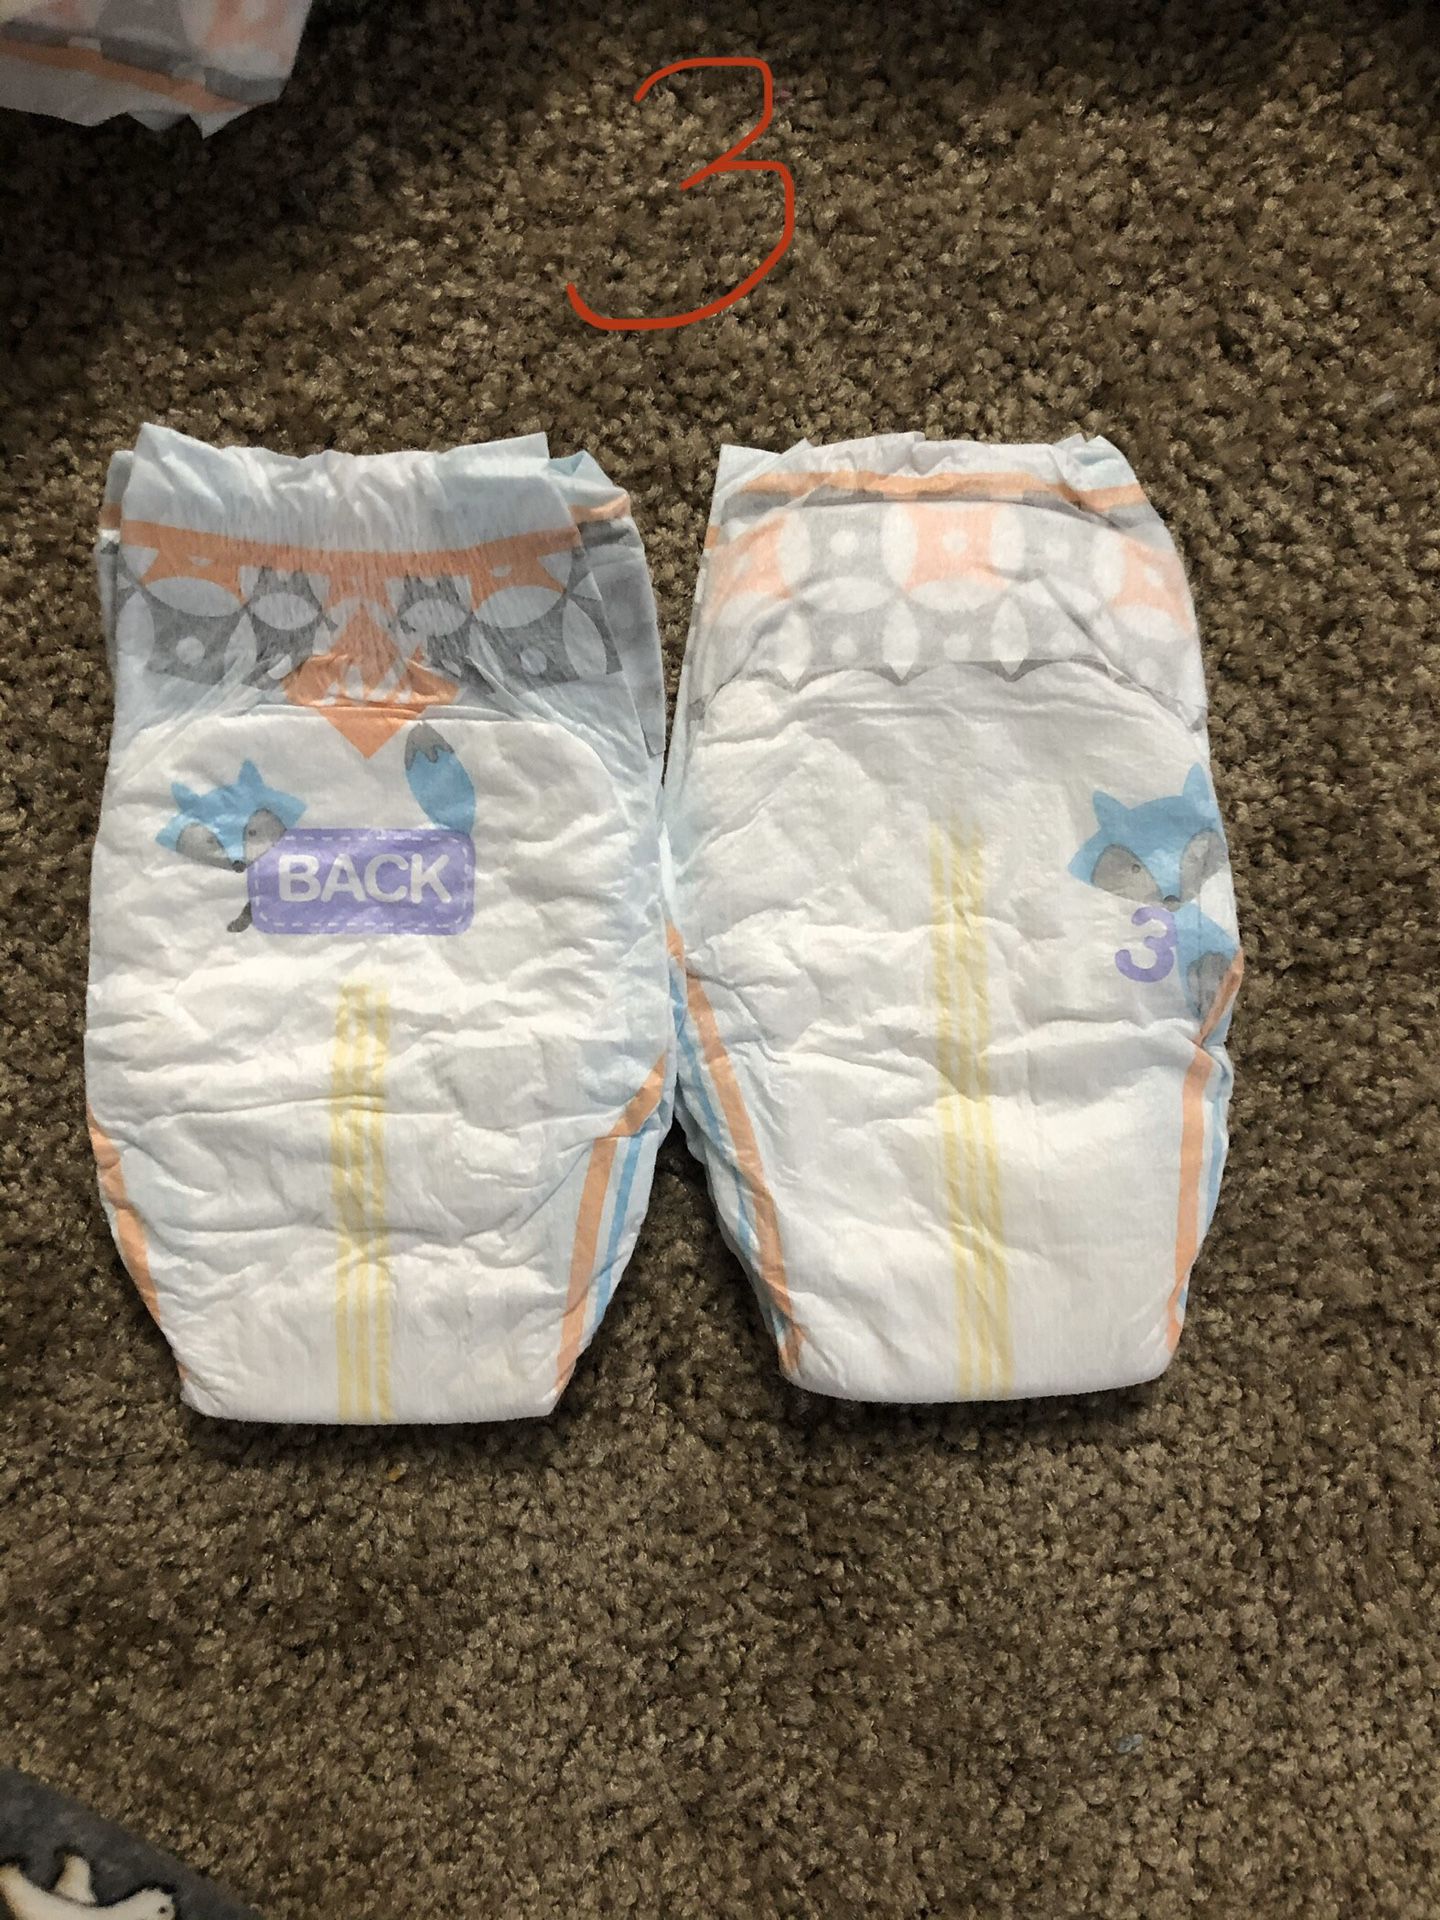 Sams club brand diapers size 3